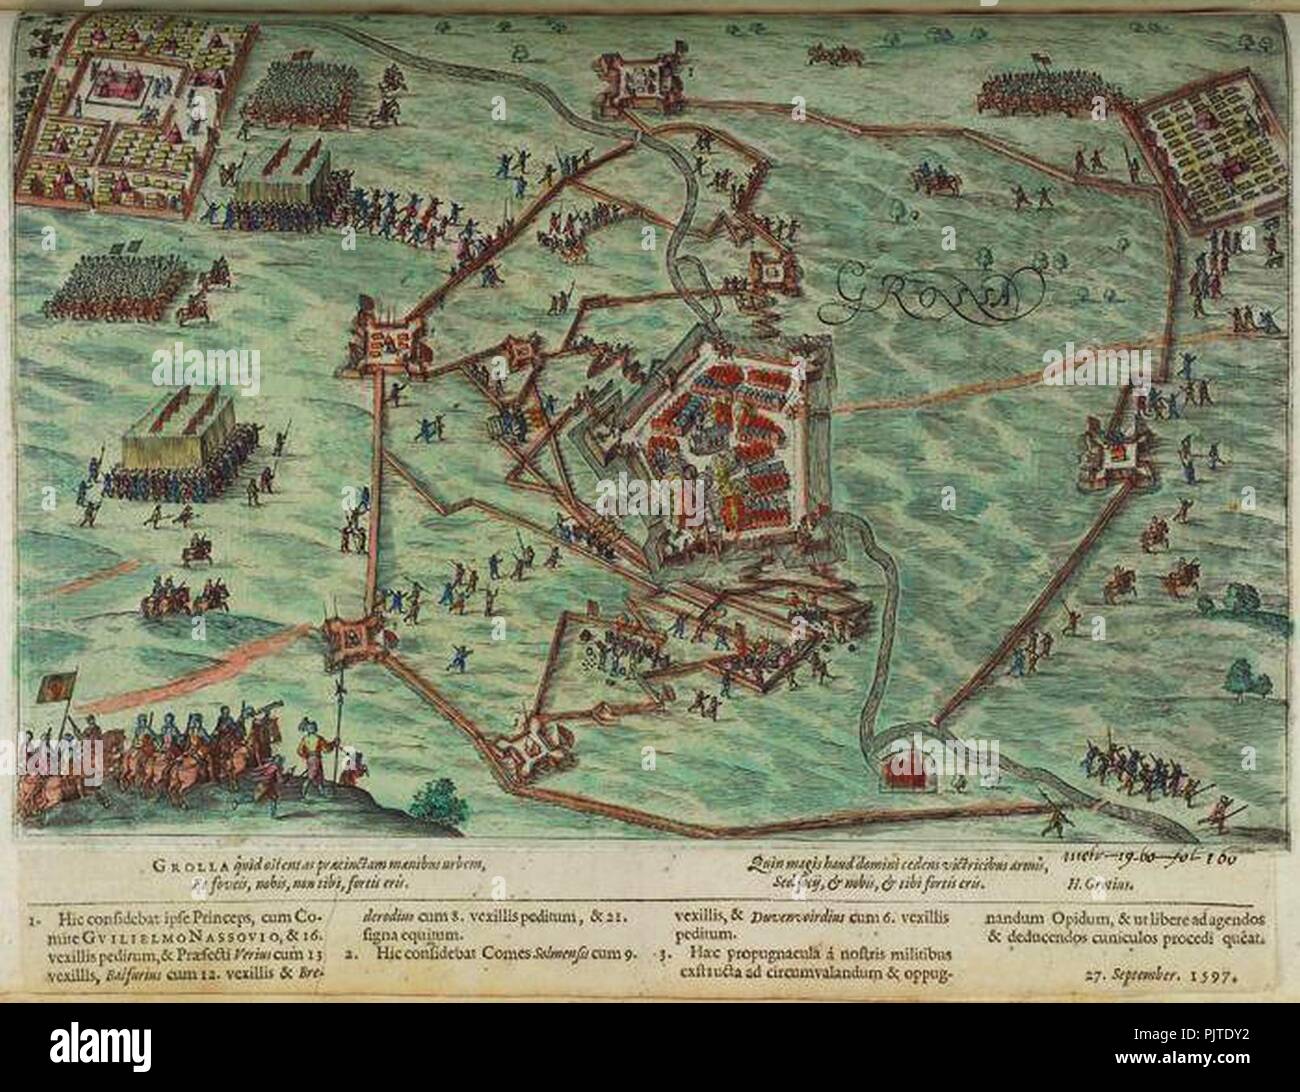 Belegering van Grol in 1597 - Siege of Groenlo in 1597. Stock Photo